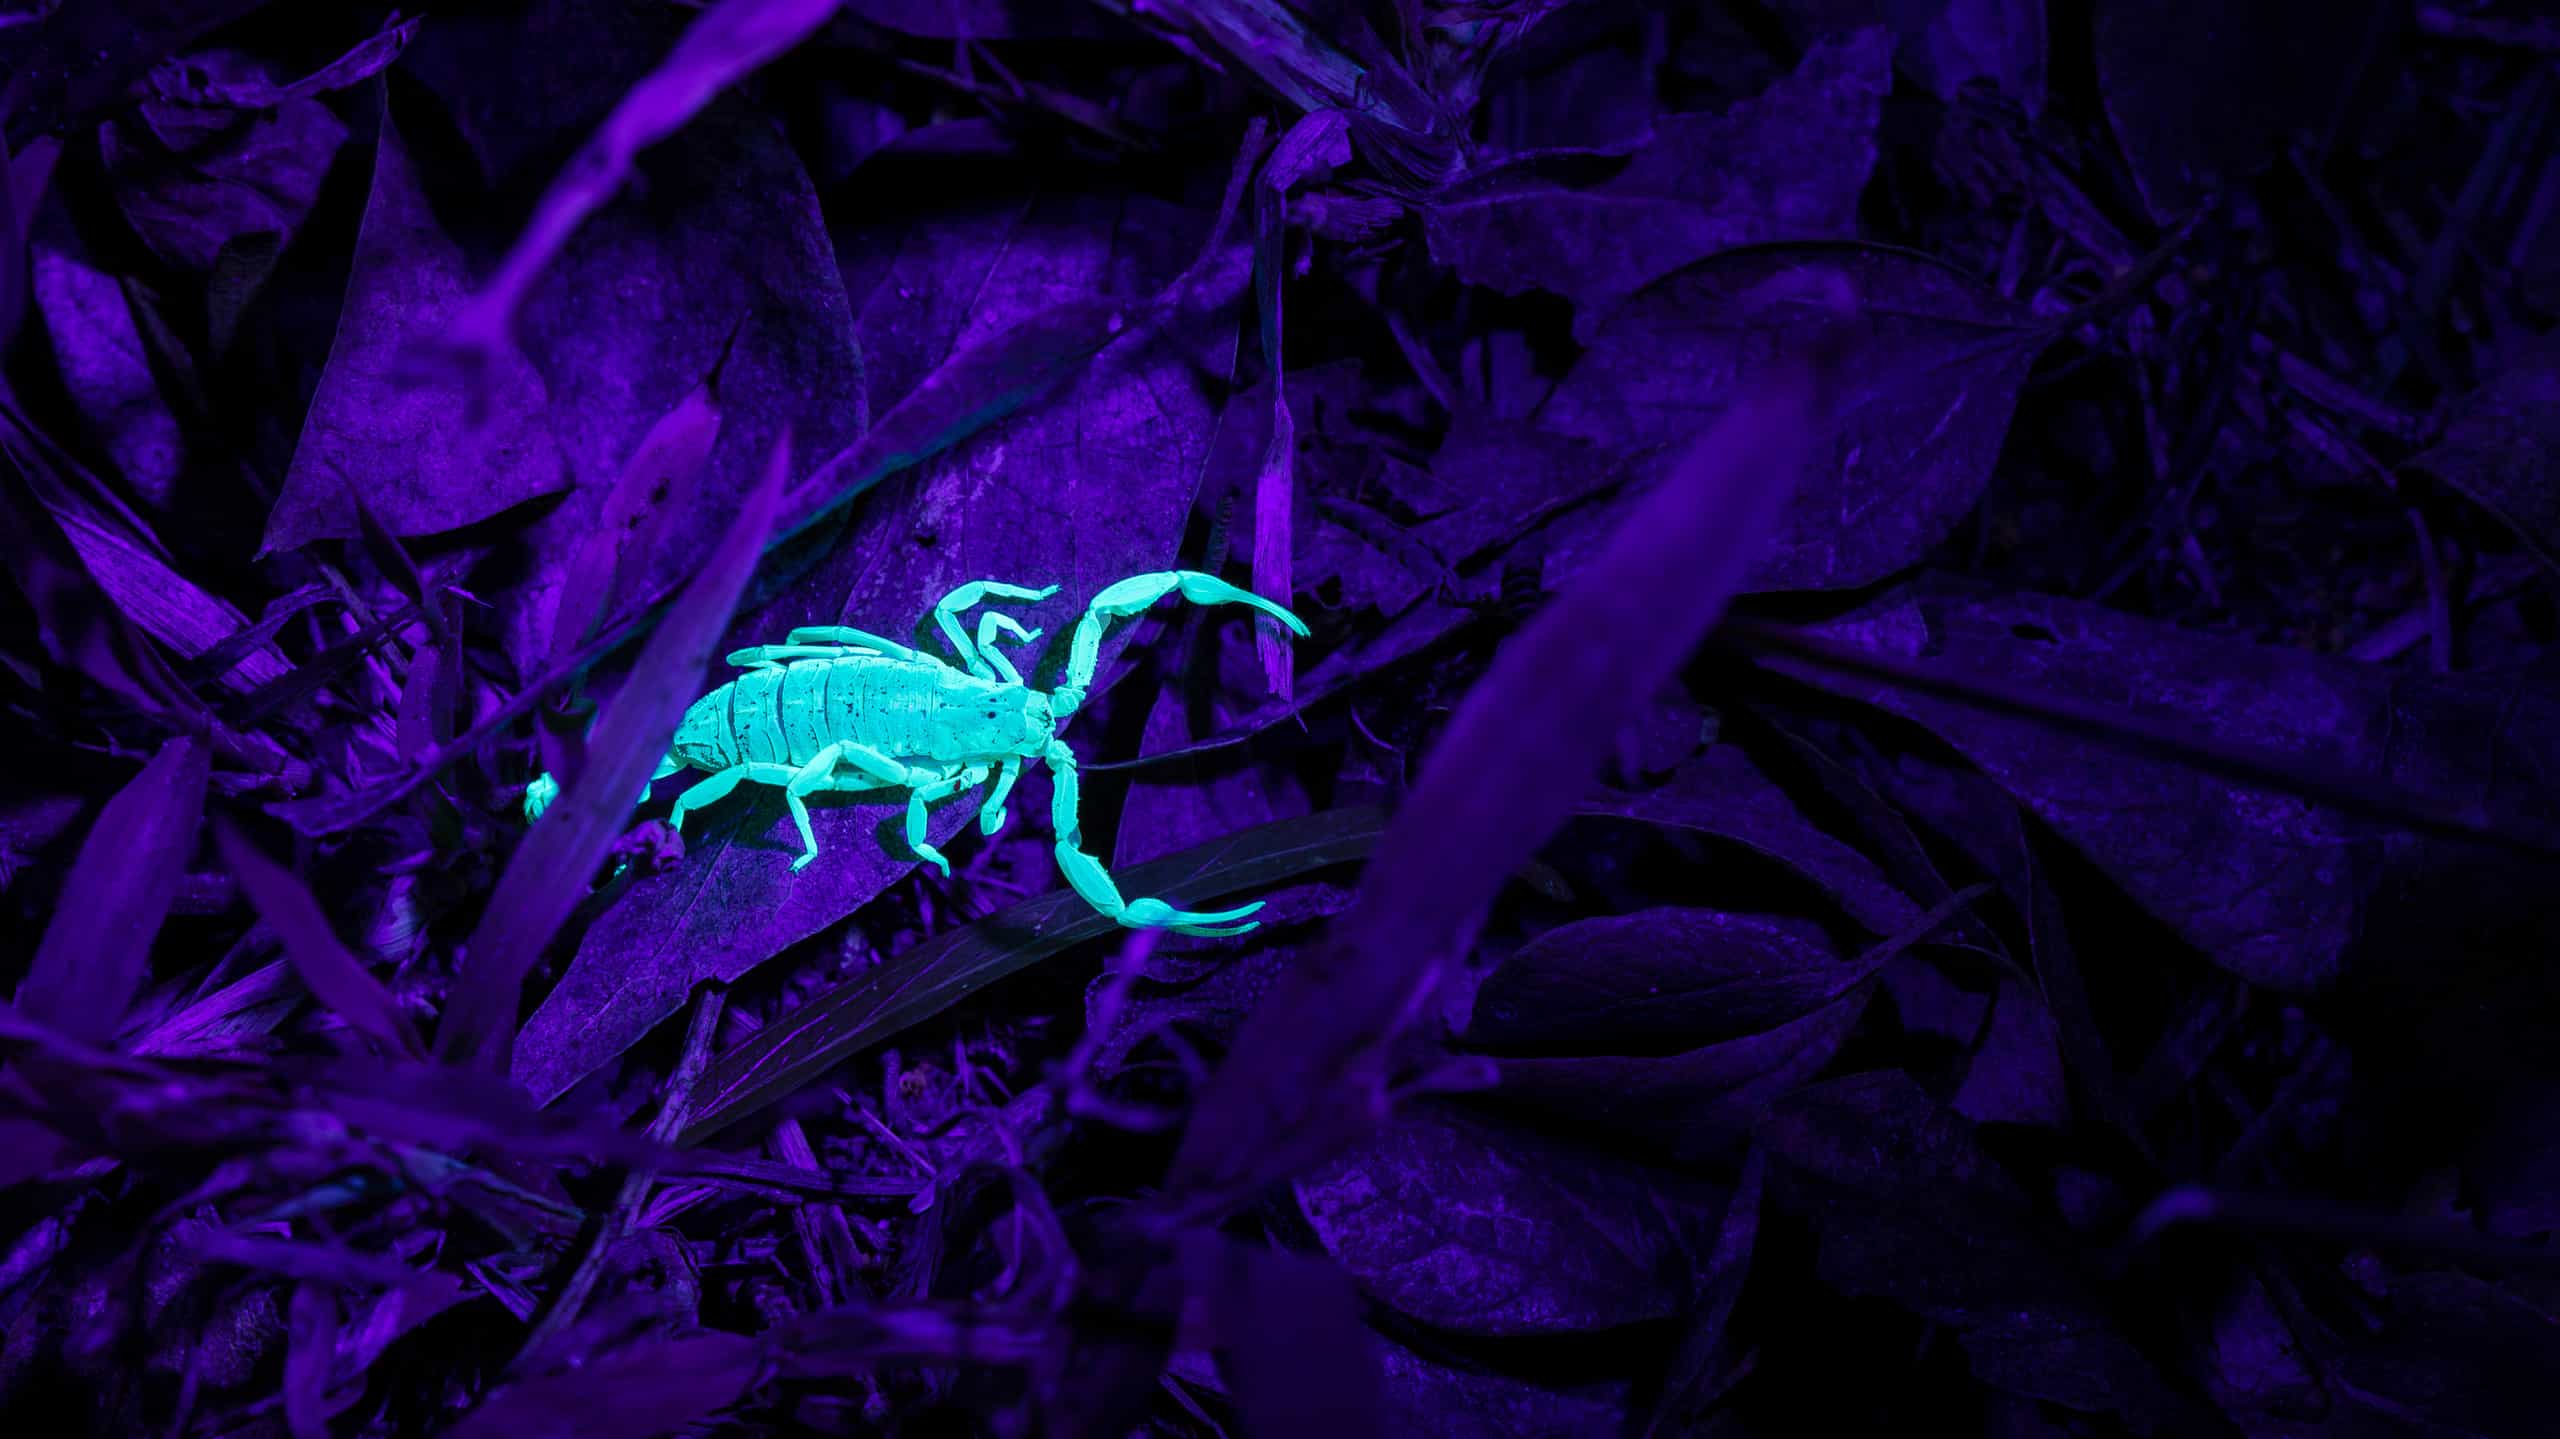 scorpion glowing in black light on dark background of leaves